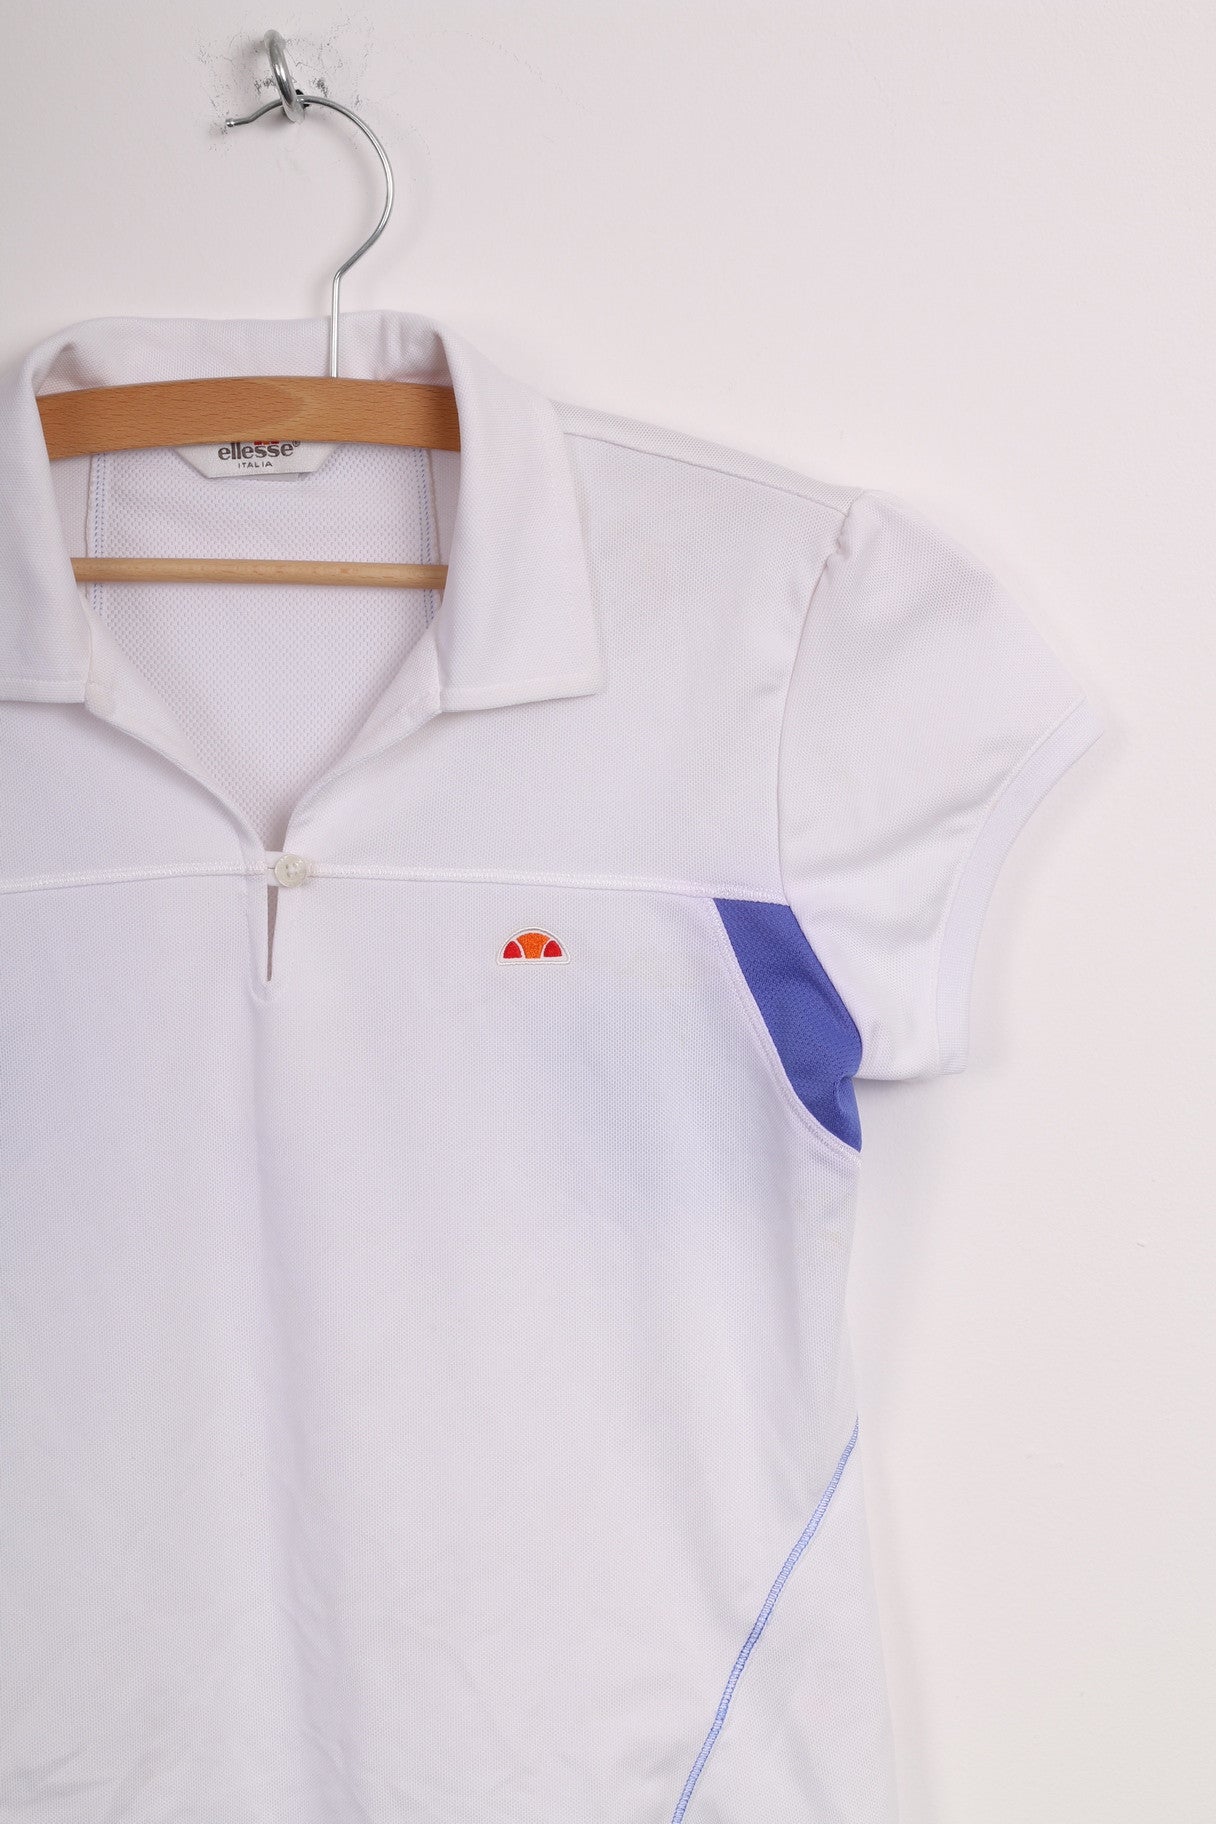 Ellesse Italia Grils L 12-14Yrs Polo Shirt White Sport Short Sleeve